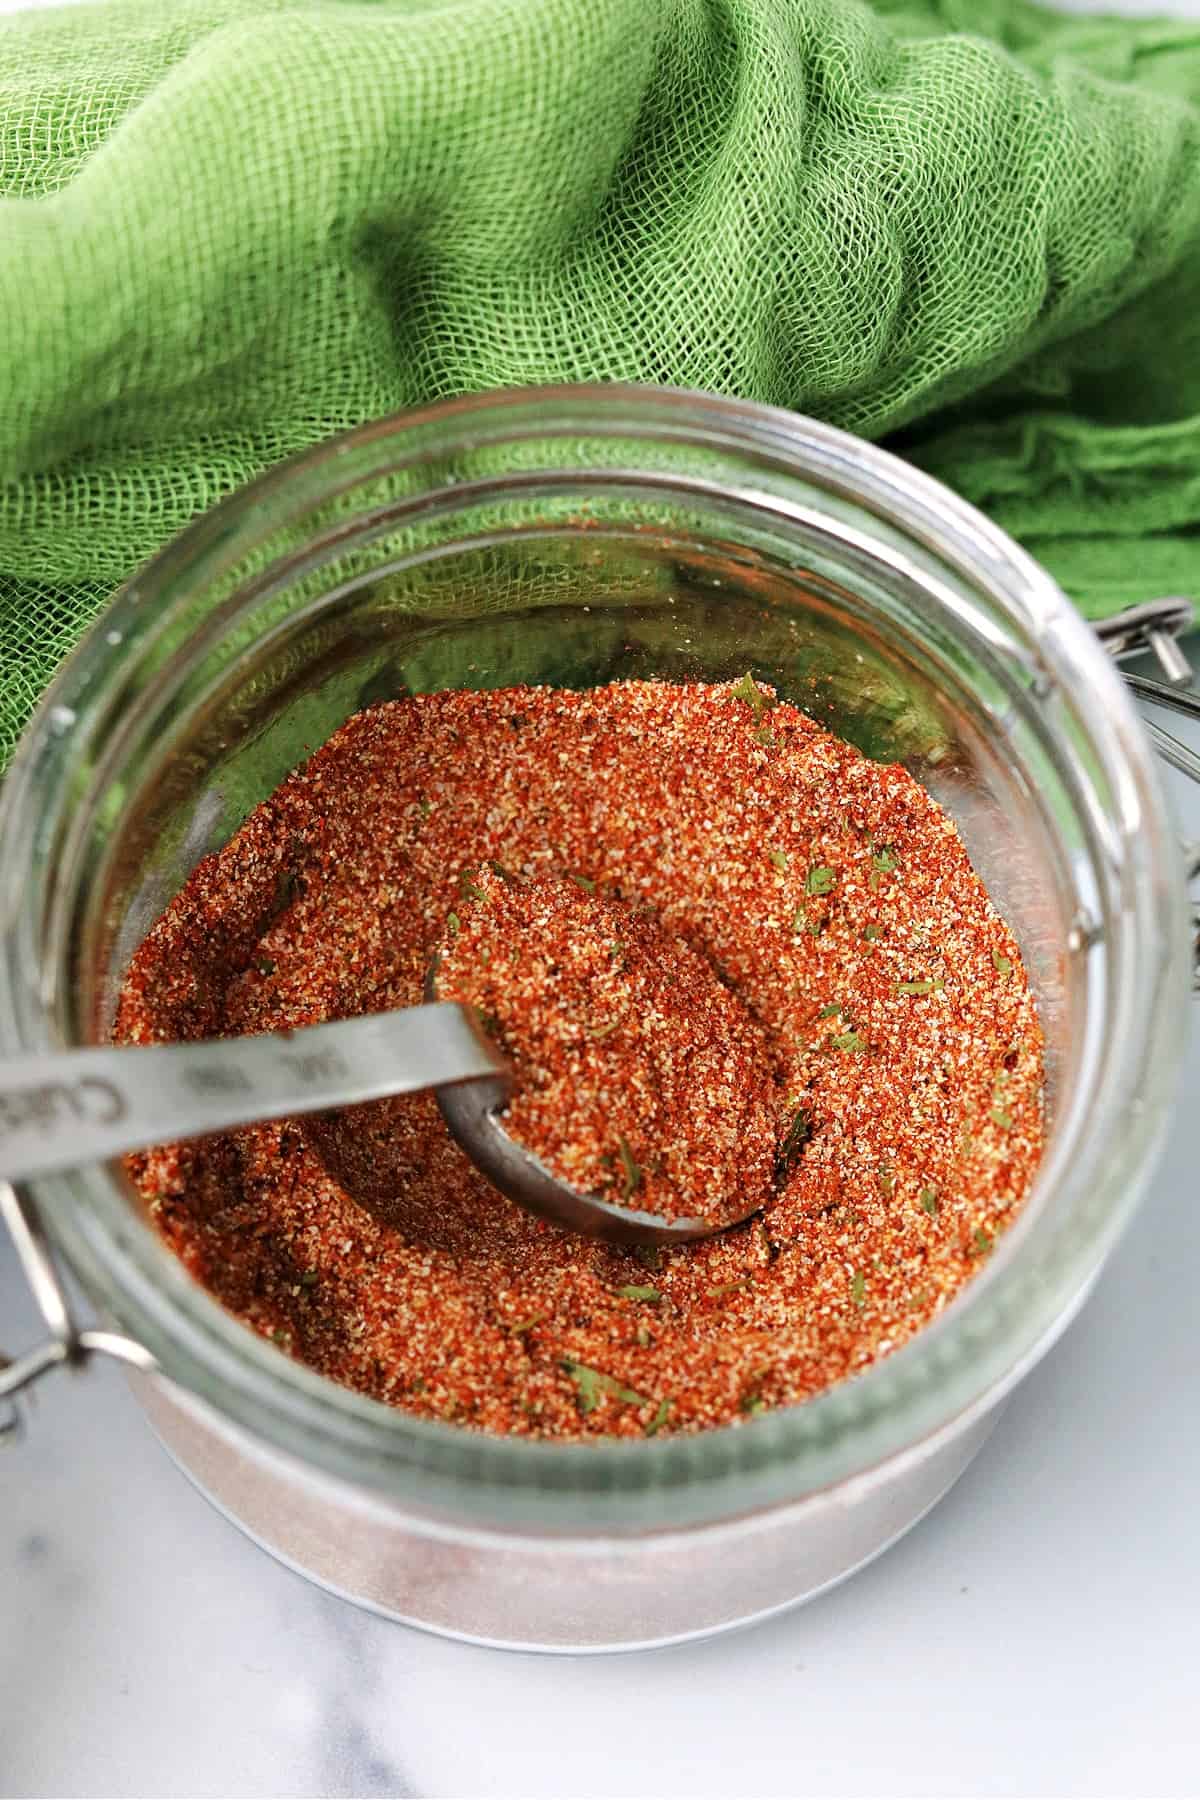 cajun seasoning recipe in a glass spice jar